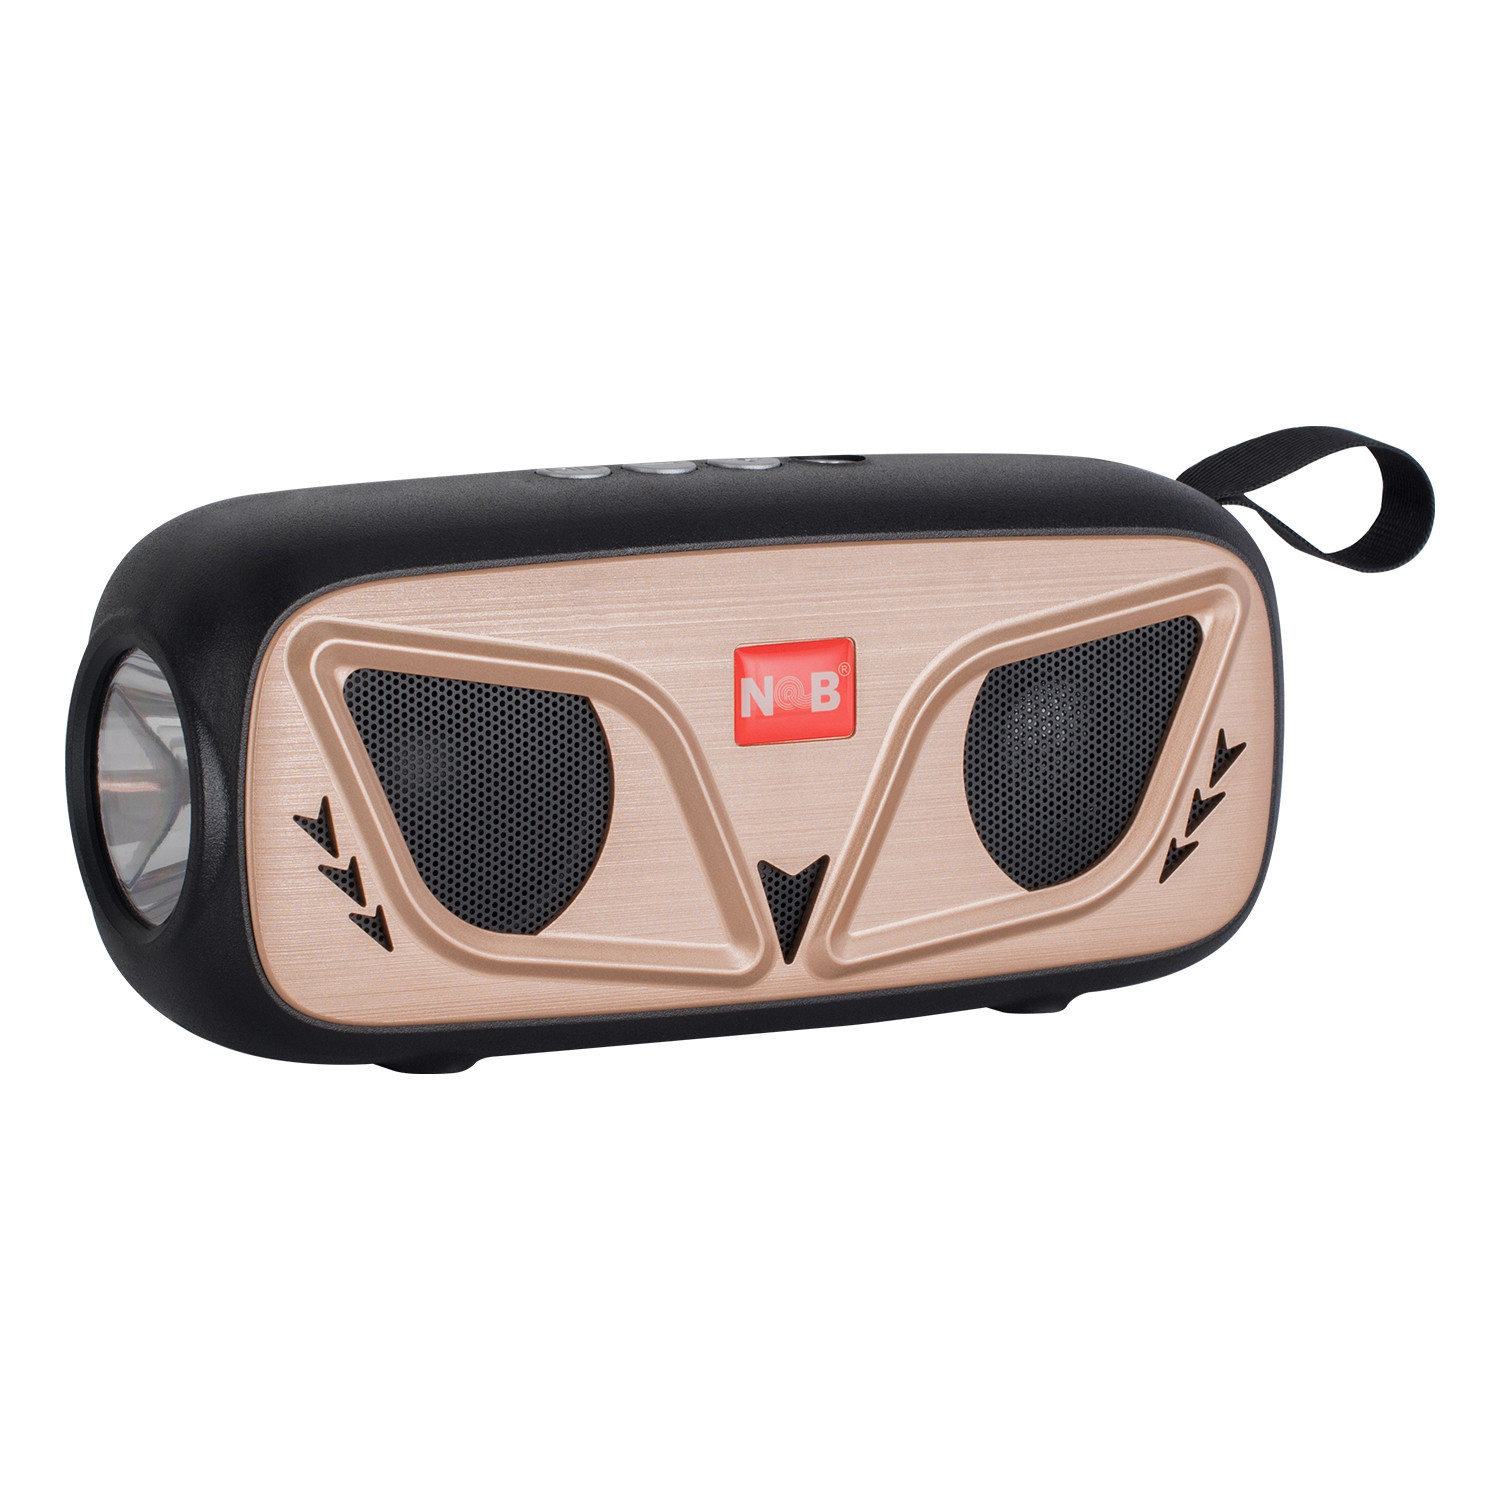 ''Owl Outdoor Compact Wireless FM Radio Bluetooth SPEAKER Flashlight, Solar Power NB306 for Universal